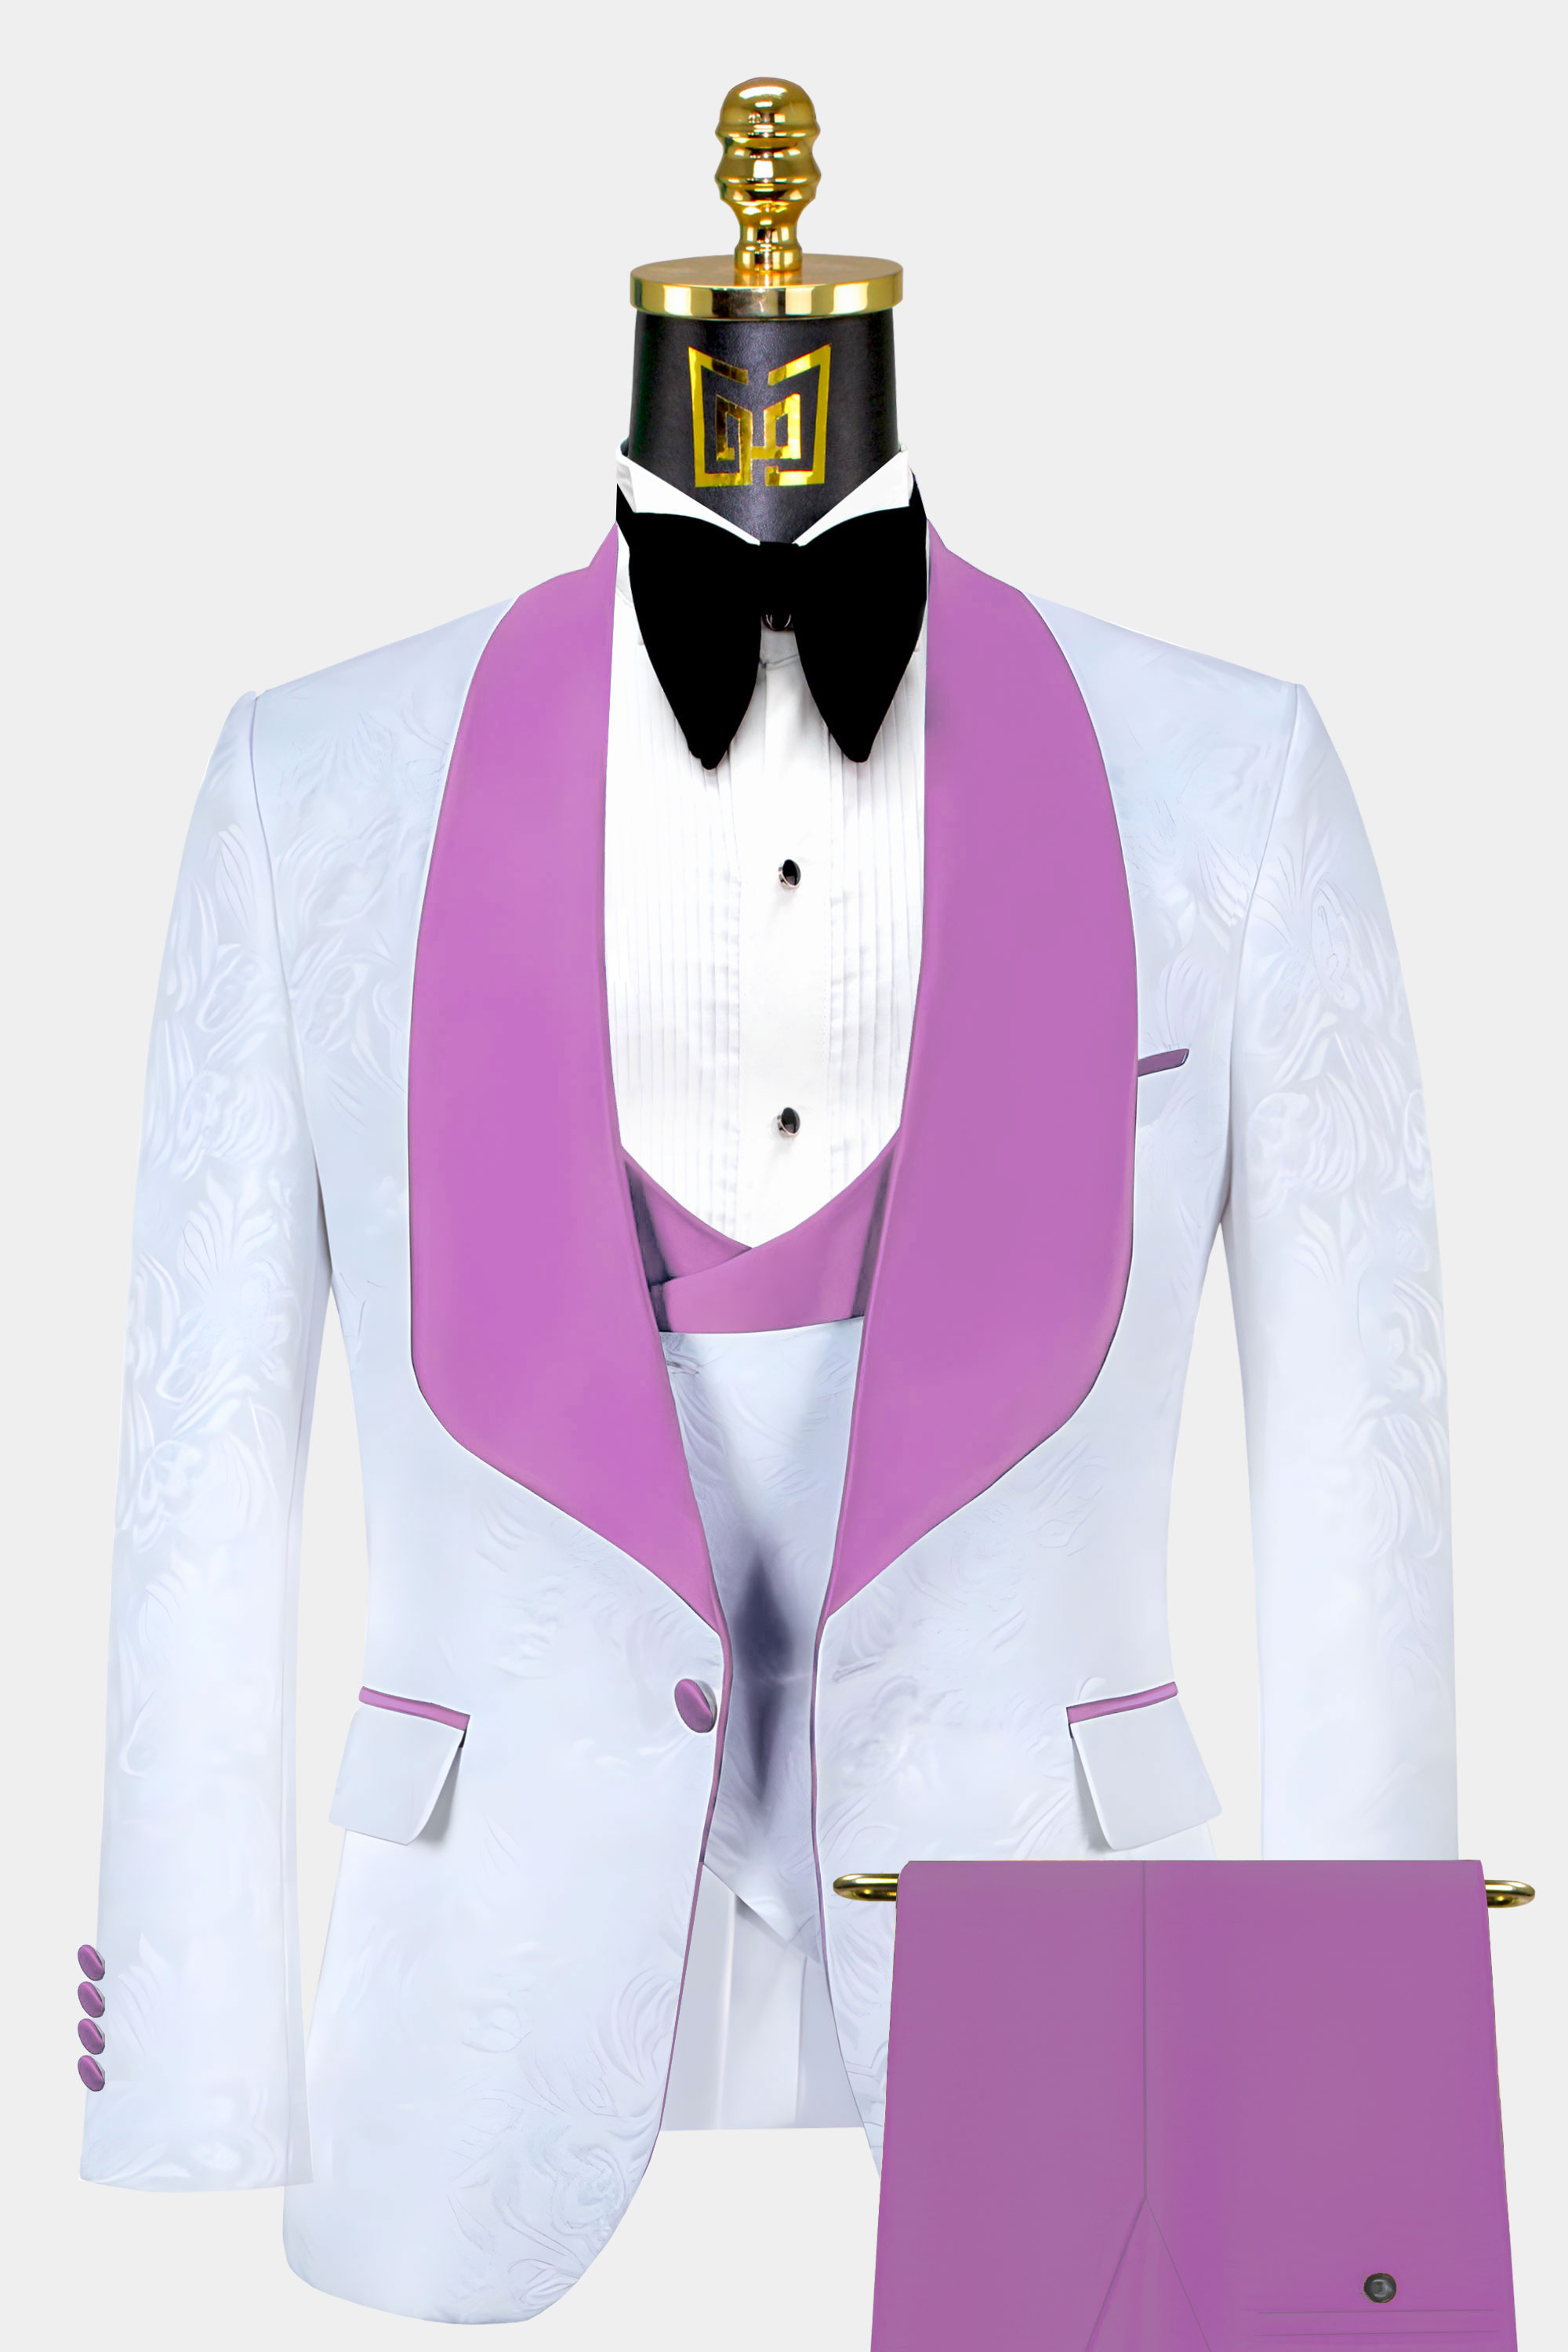 Lilac-and-White-Tuxedo-Wedding-Prom-Groom-Suit-For-Men-from-Gentlemansguru.com